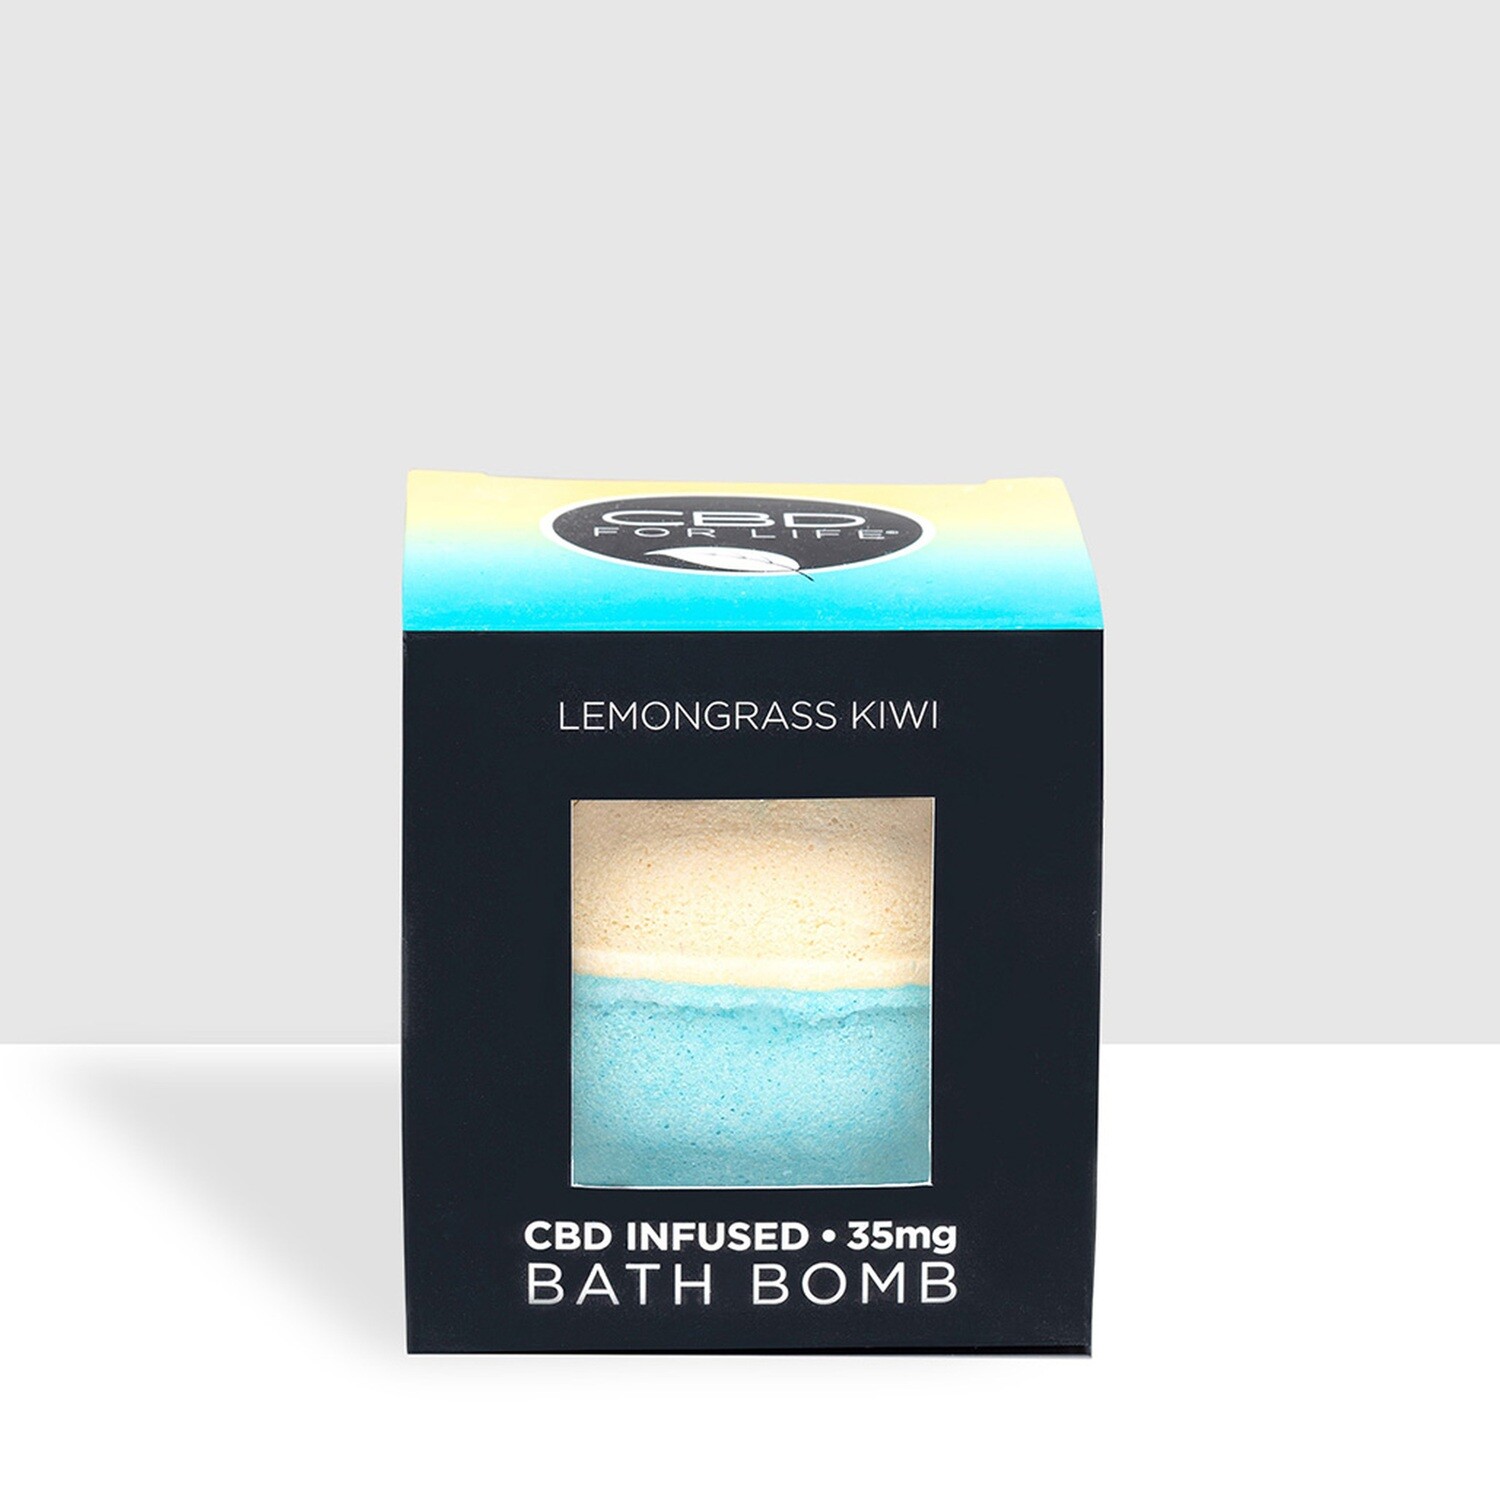 CBD For Life Lemongrass/Kiwi Bath Bomb - 35MG